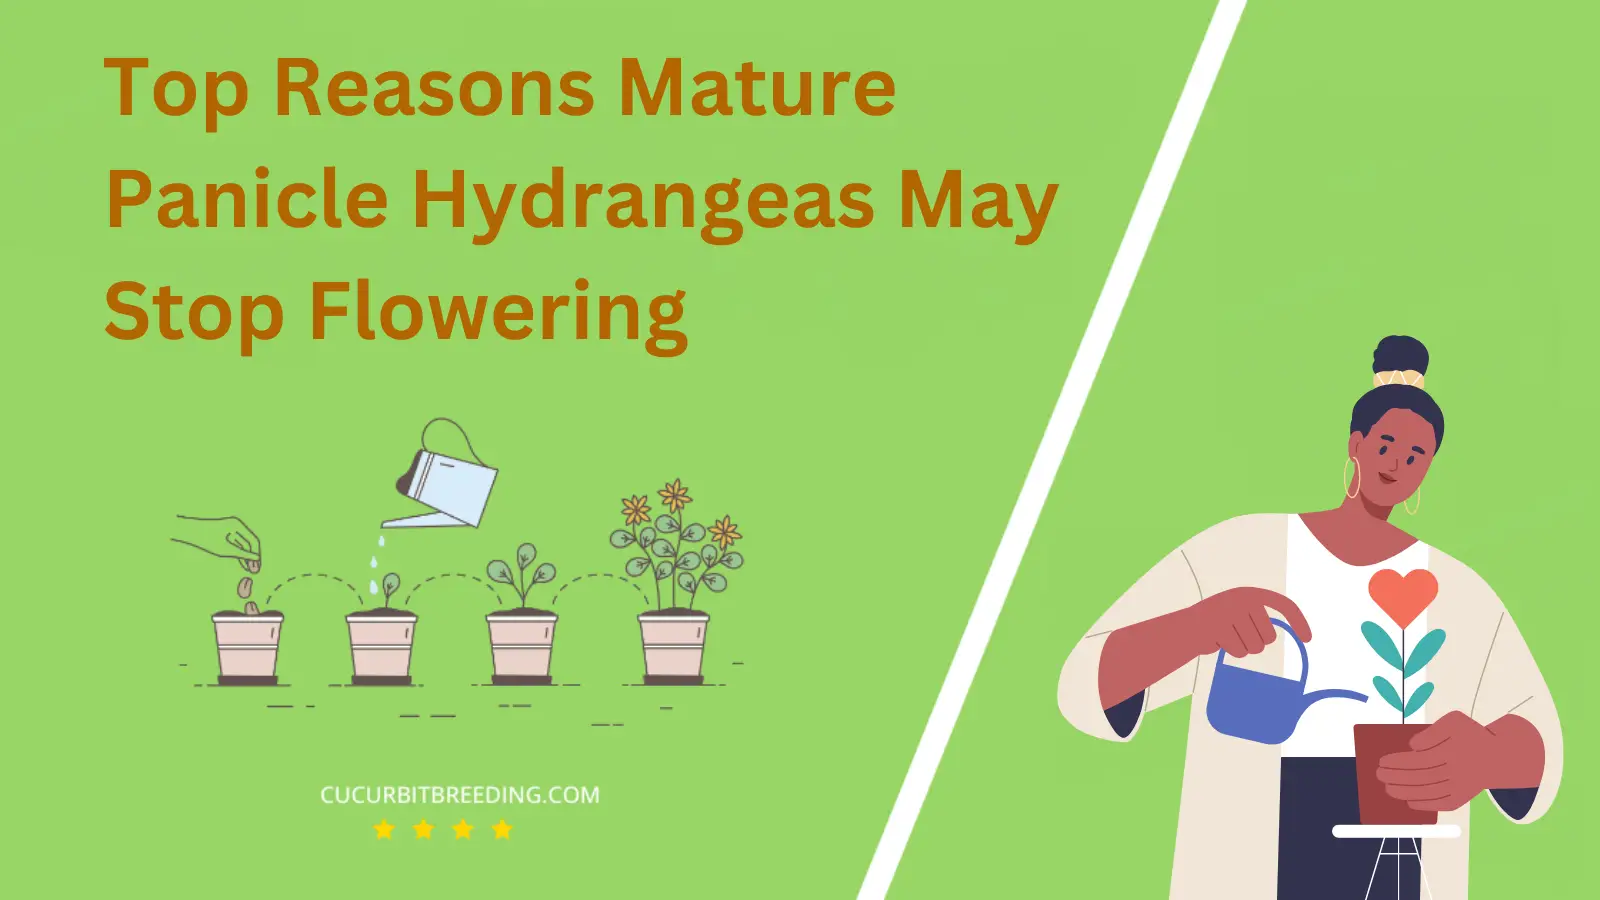 Top Reasons Mature Panicle Hydrangeas May Stop Flowering